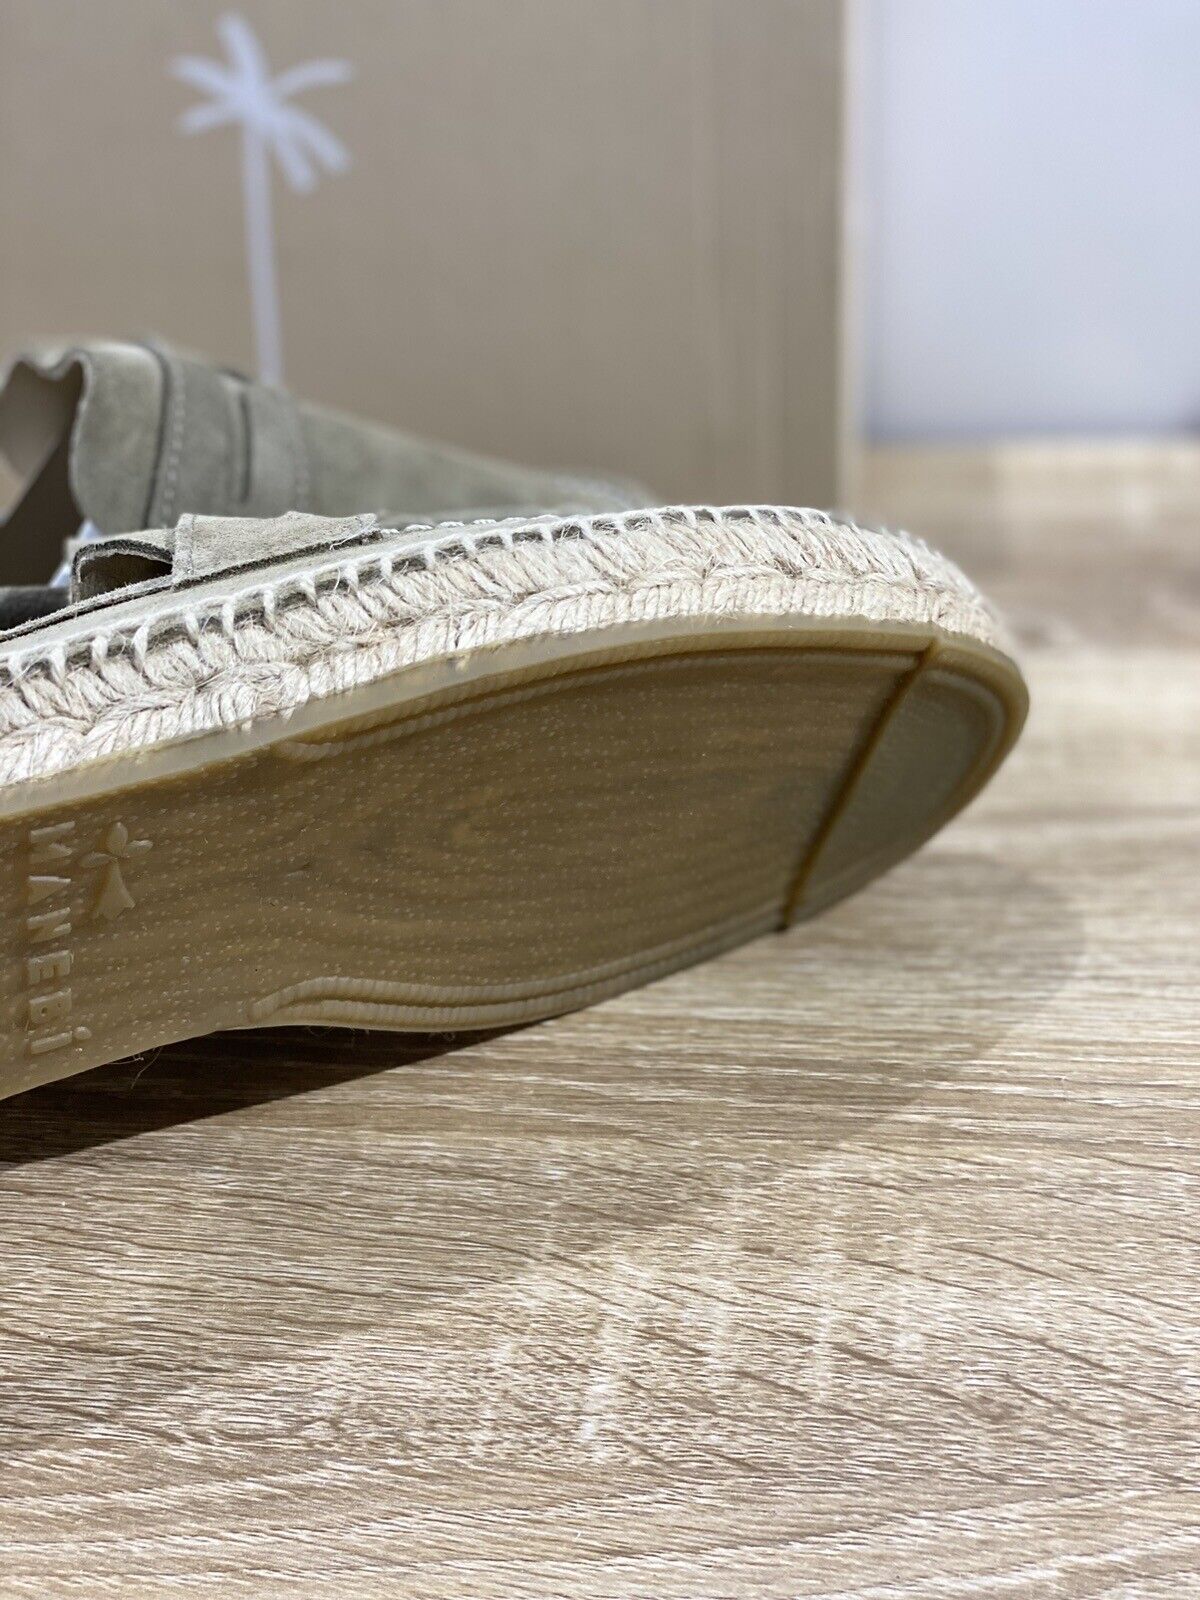 Manebi’ Uomo Espadrilles Mocassino Suede Beige Casual Summer Shoes 45